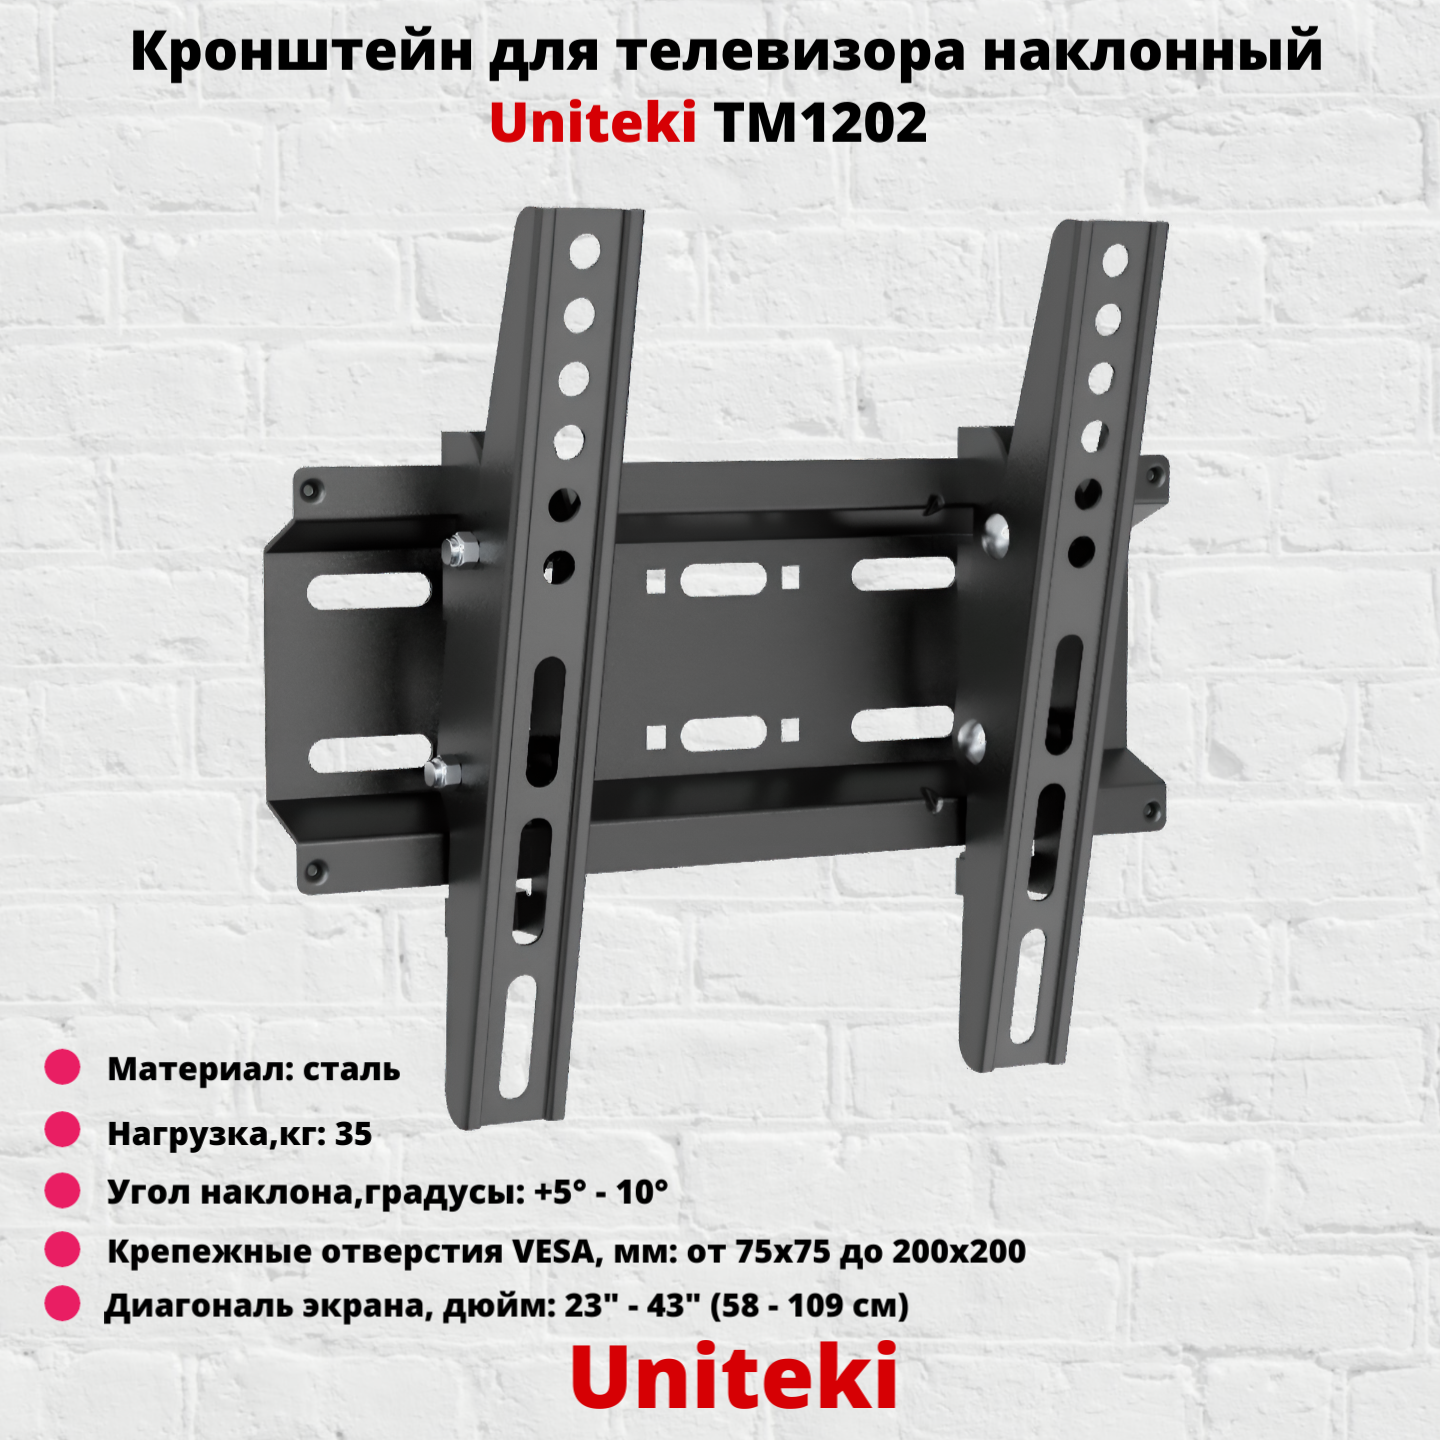 Наклонный кронштейн для телевизора Uniteki TM1202B 23-43 черный